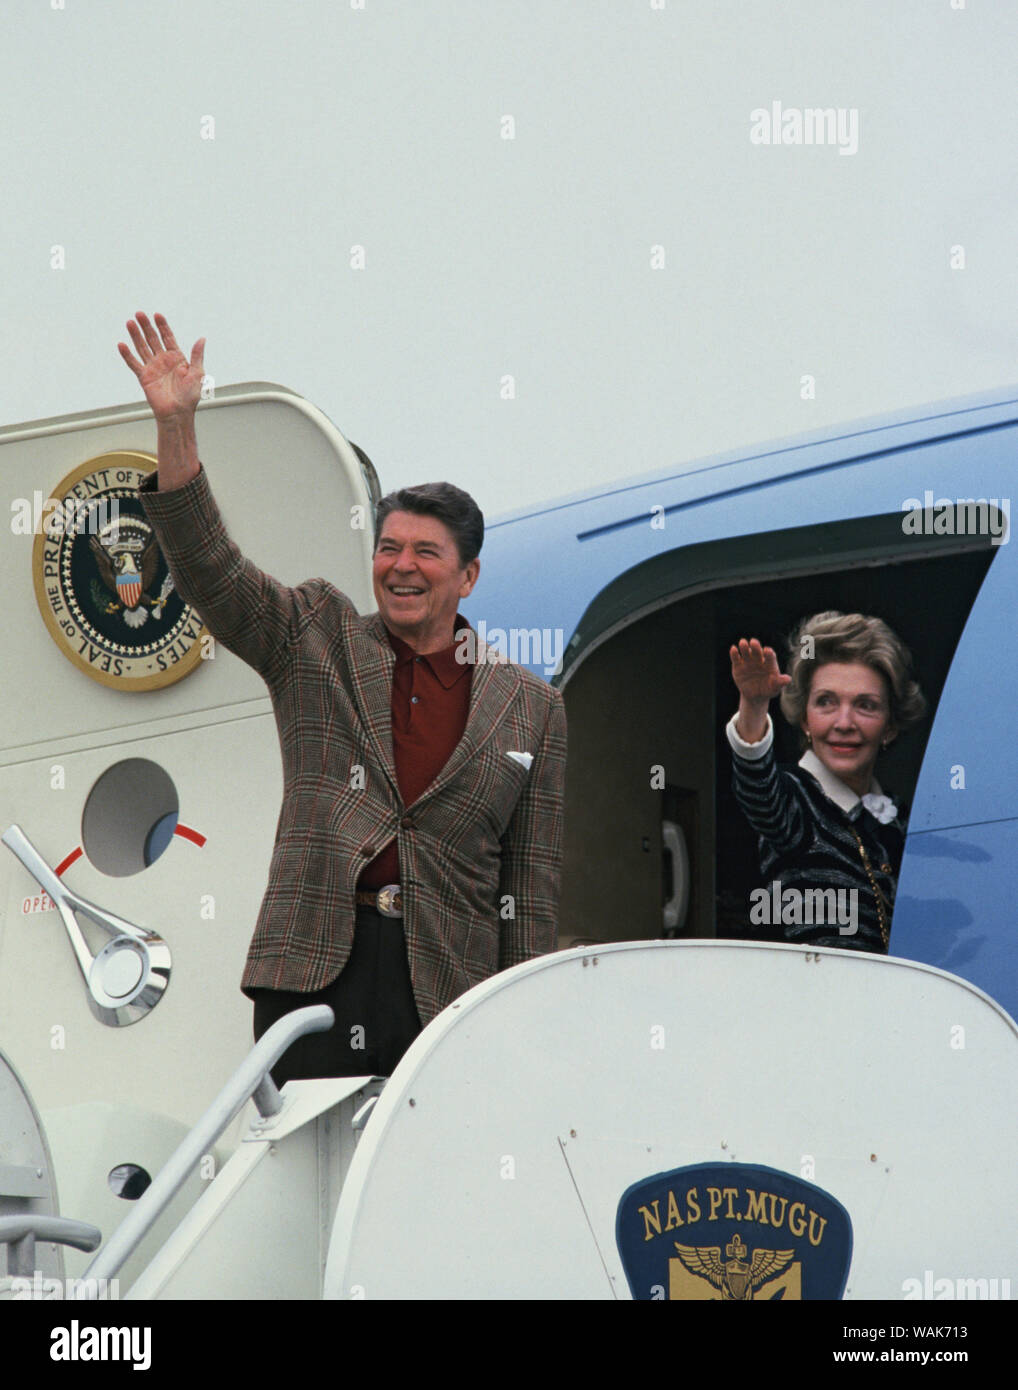 April 1985. Präsident Ronald Reagan und First Lady Nancy Reagan Welle wie Sie board Air Force One am Punkt Magu Naval Air Base. Stockfoto